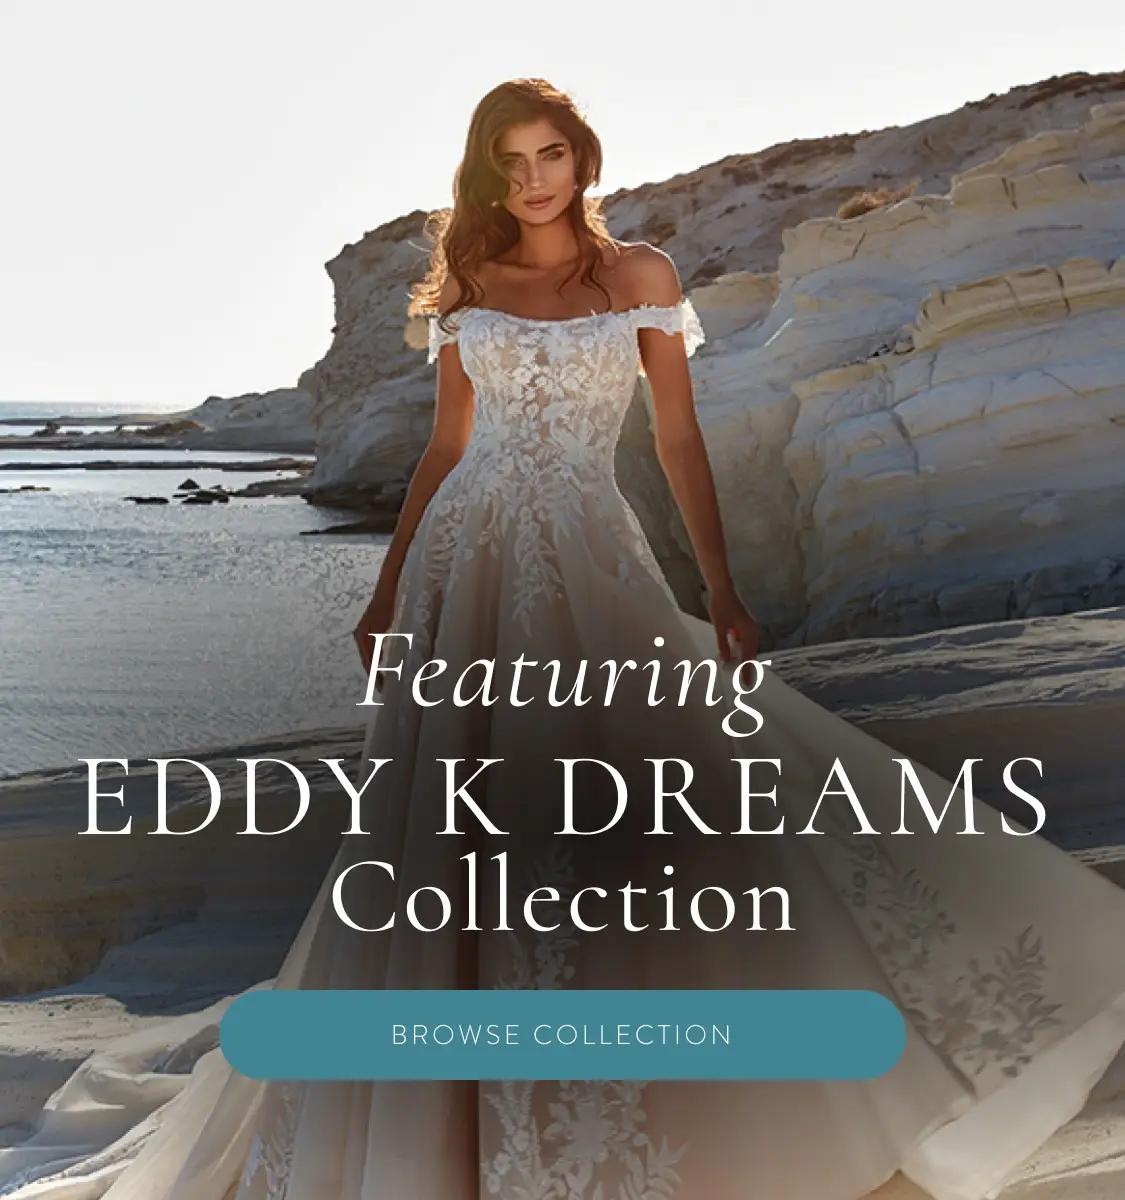 Mobile Eddy K Dreams Collection Banner